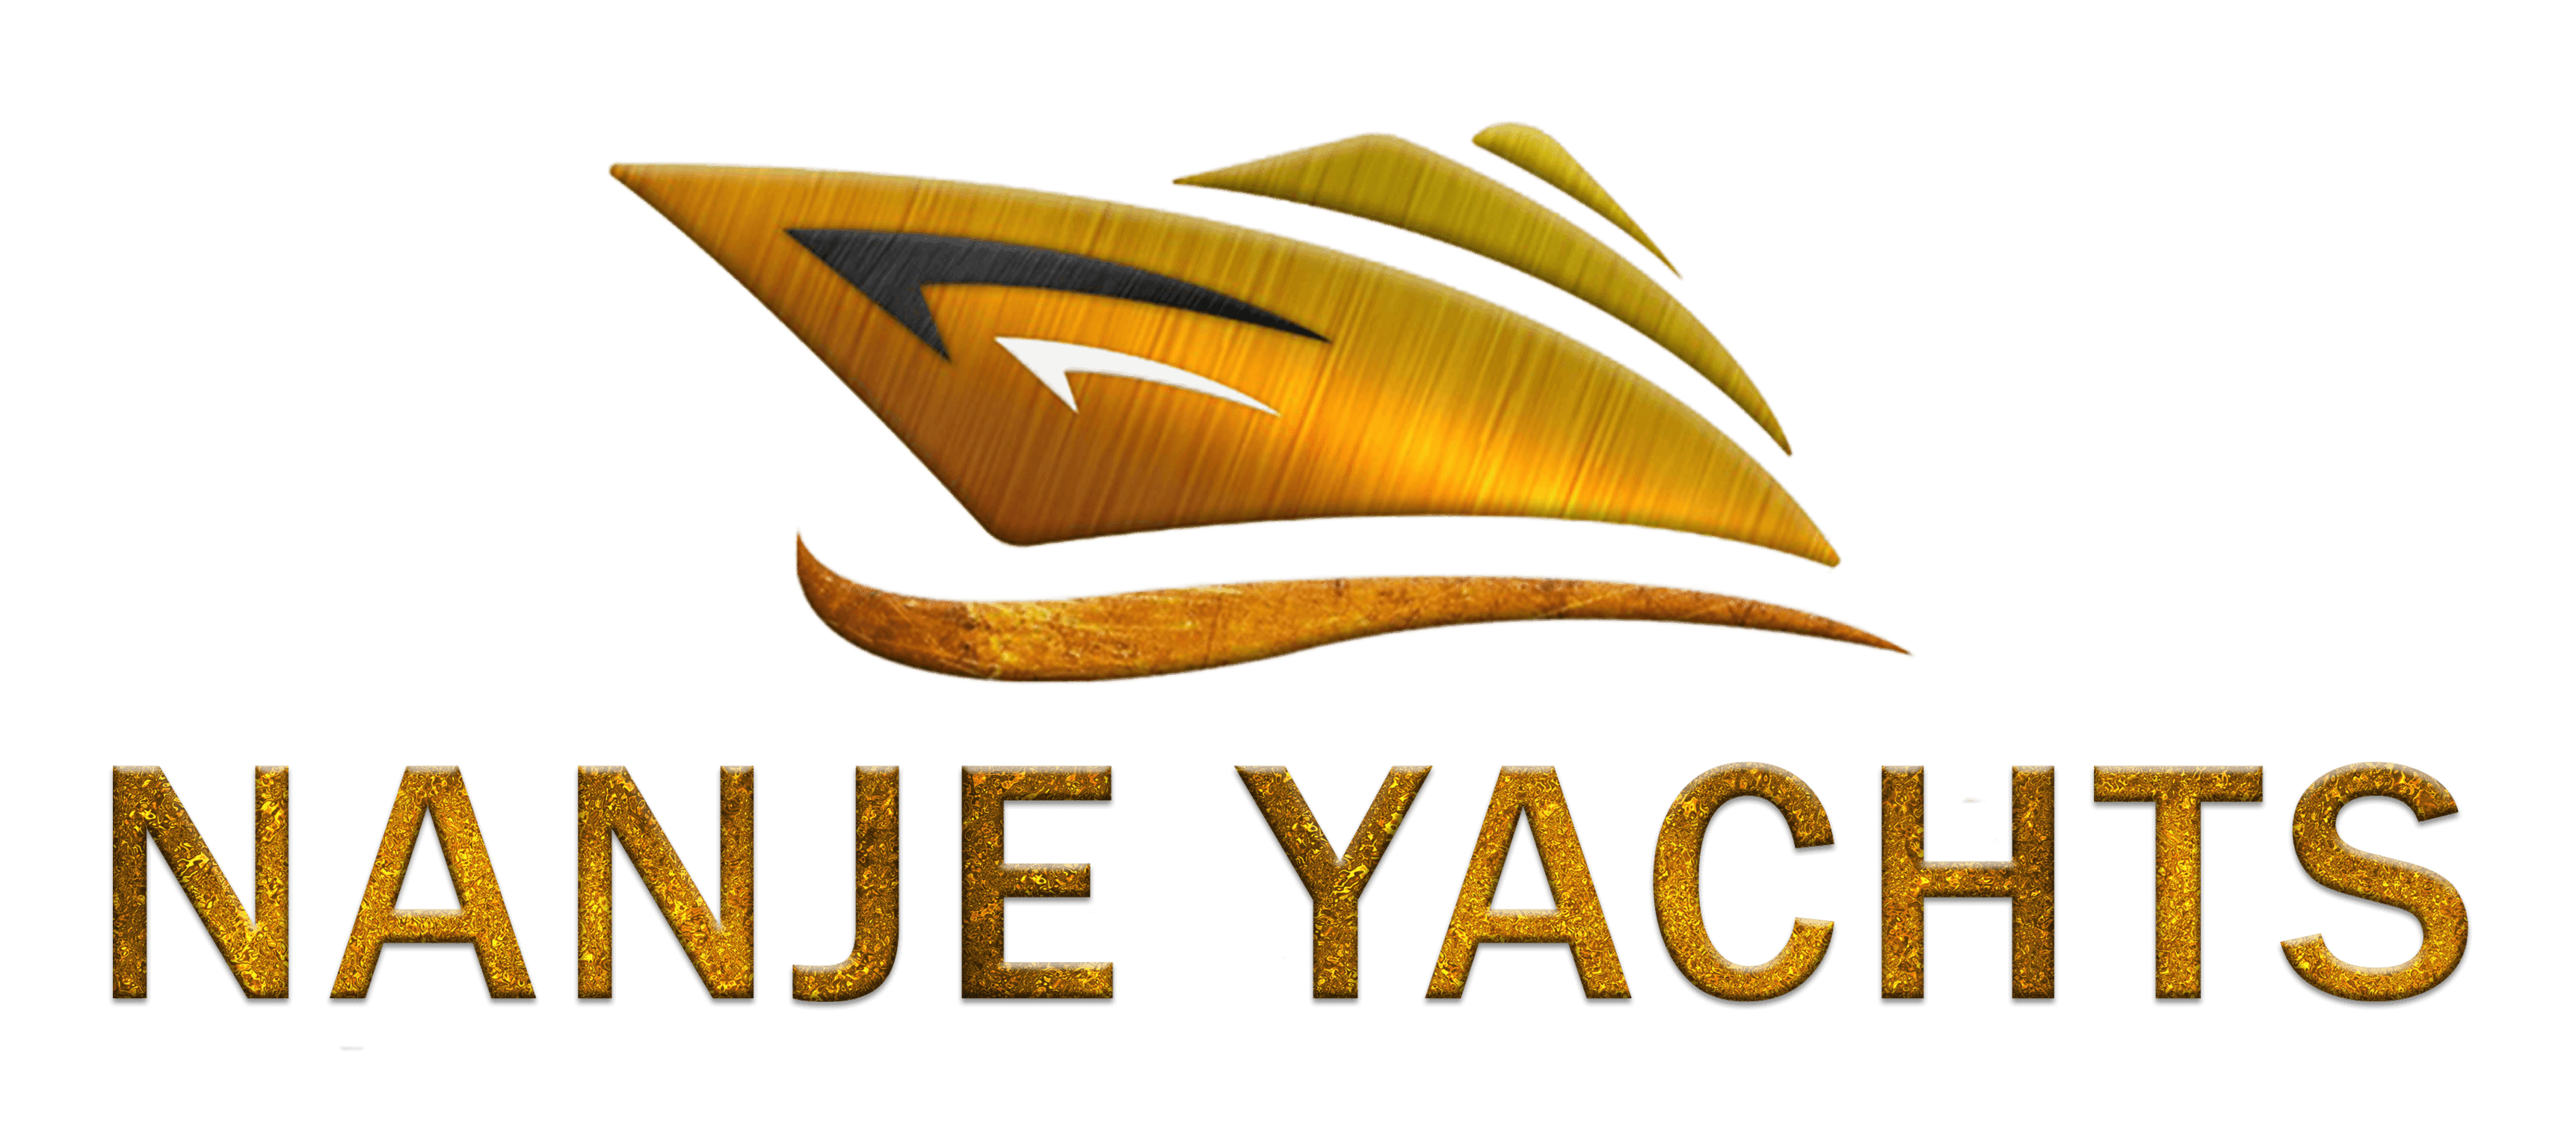 Yacht Rental | Yacht Rental Dubai | Luxury Small/Private Charter Yacht/Boat Rental Company in Dubai | Nanje Yachts